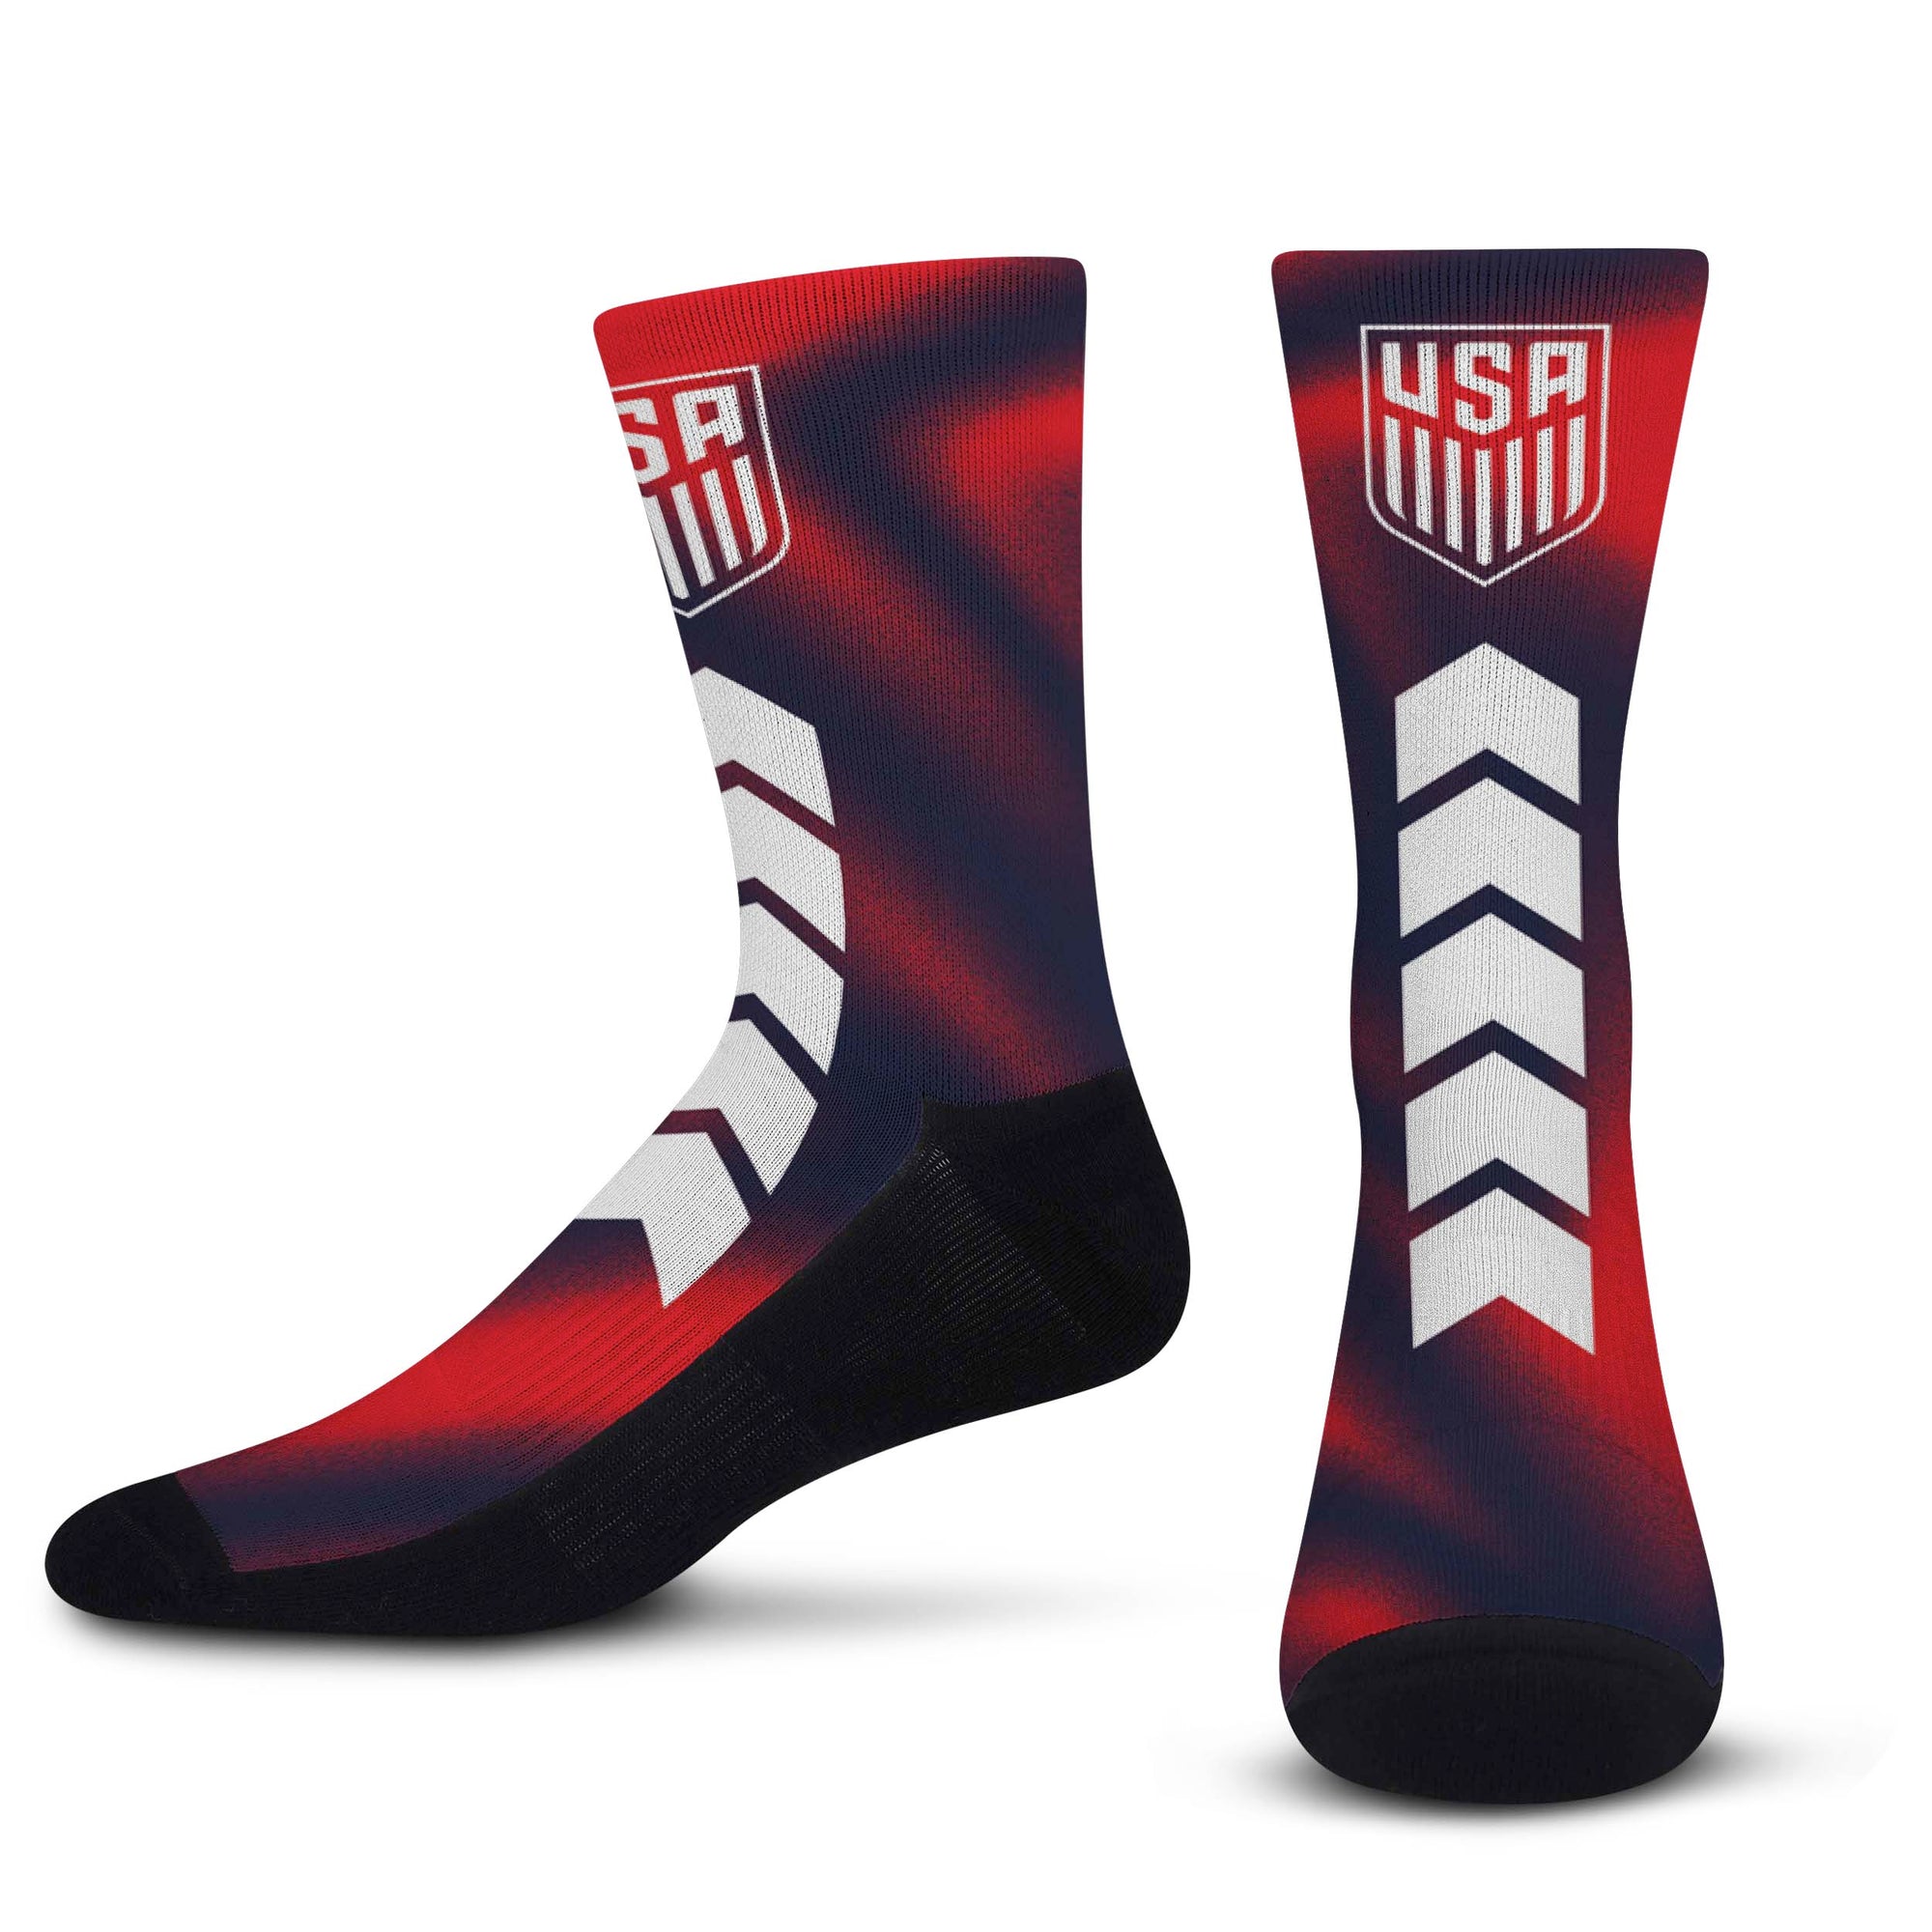 Las Vegas Raiders Argyle Socks-One Size Fits Most